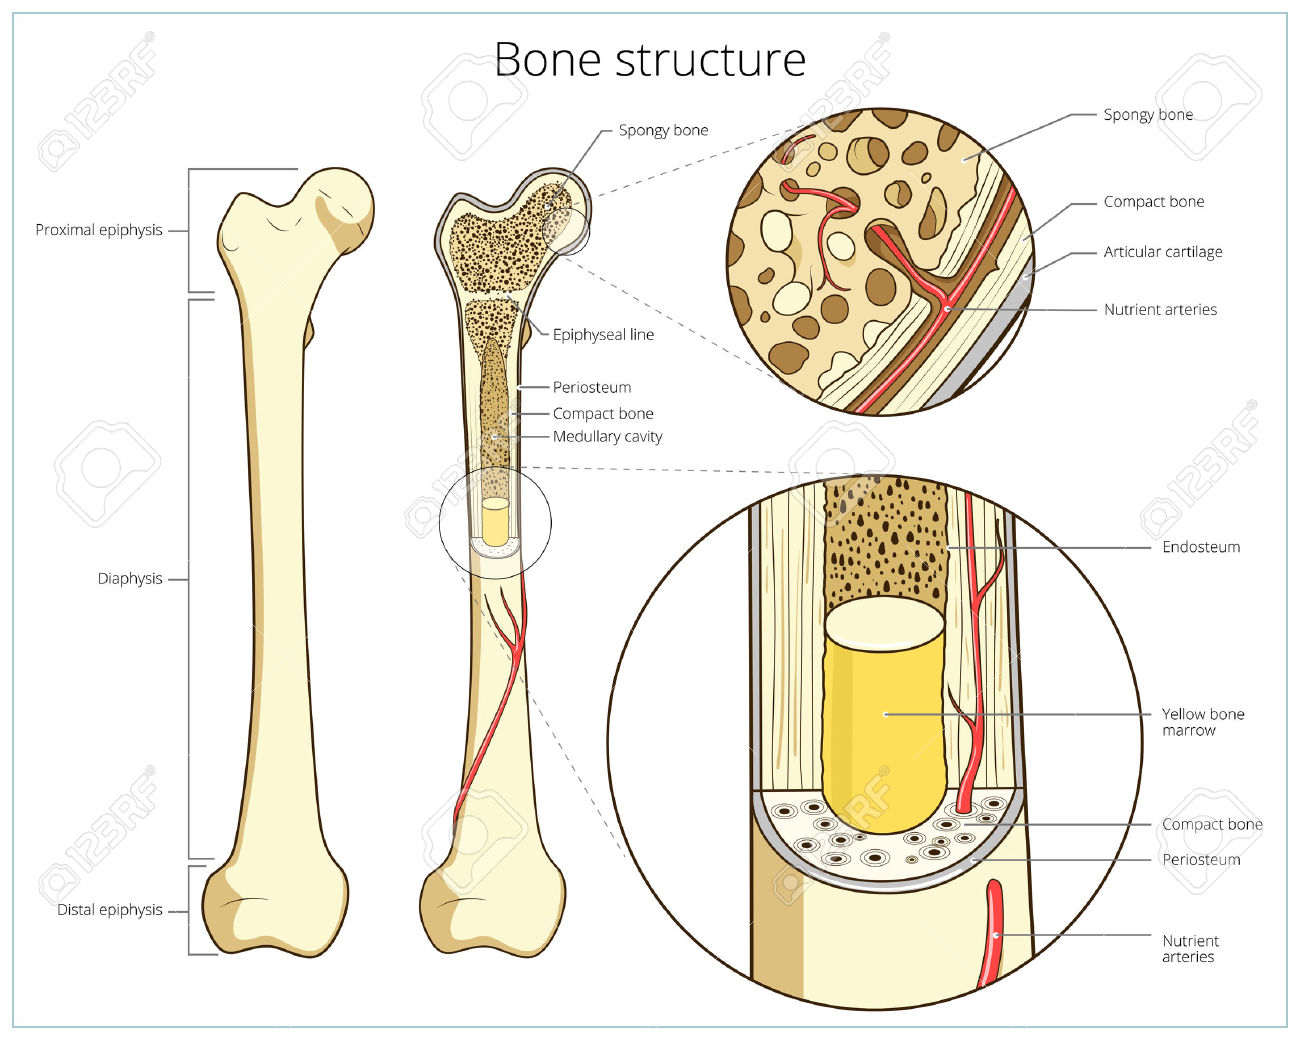 Bone structure clipart - Clipground